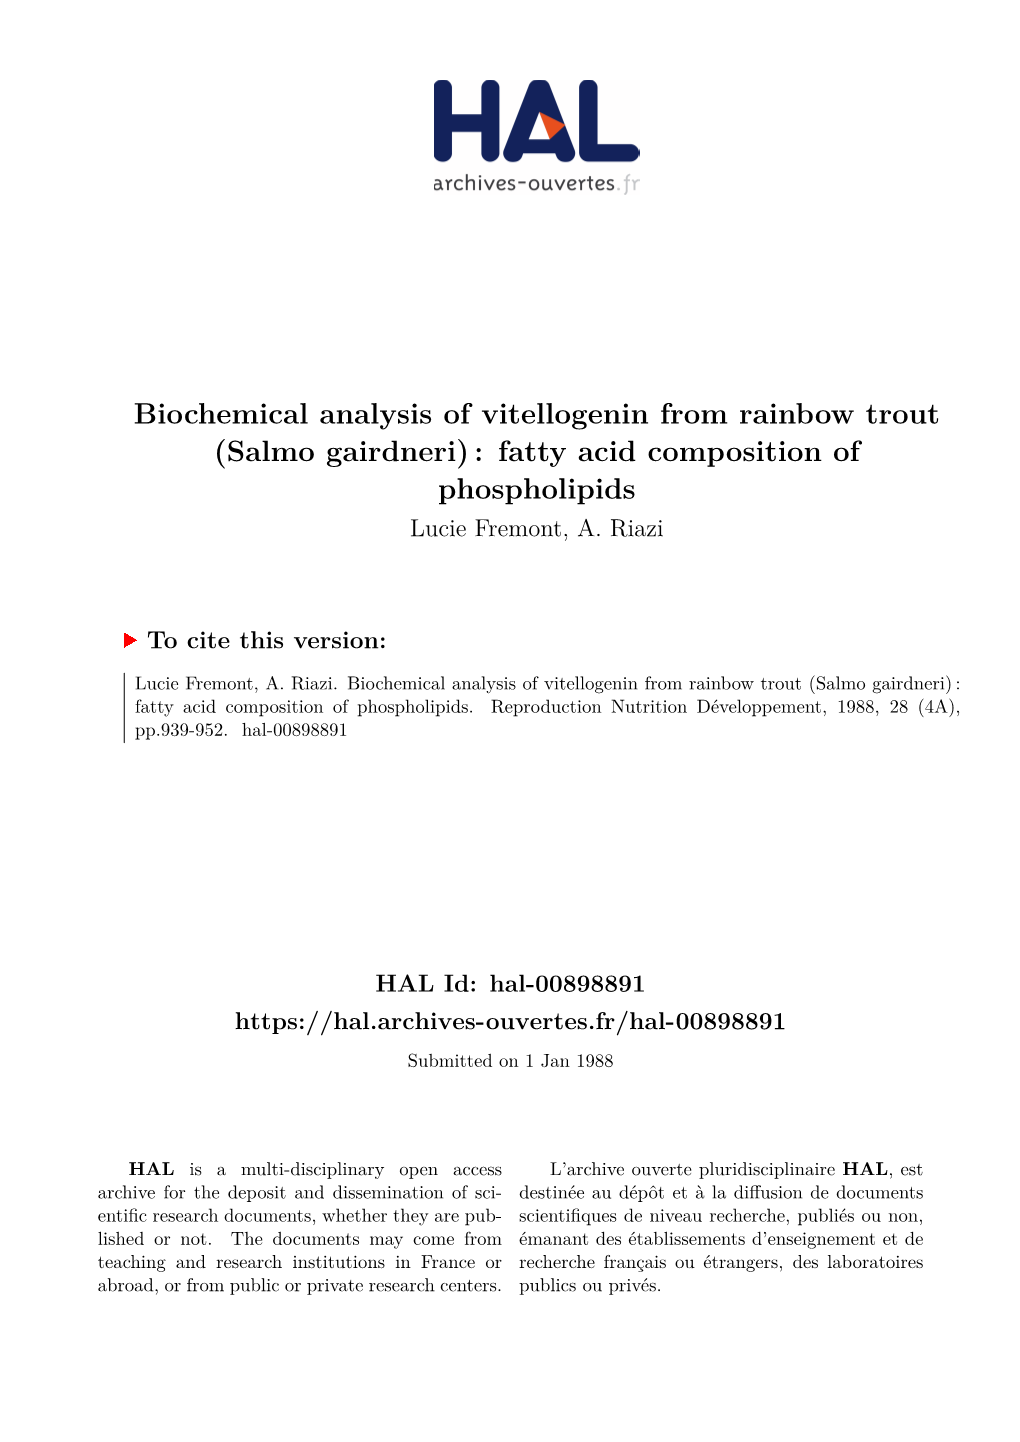 Biochemical Analysis of Vitellogenin from Rainbow Trout (Salmo Gairdneri) : Fatty Acid Composition of Phospholipids Lucie Fremont, A